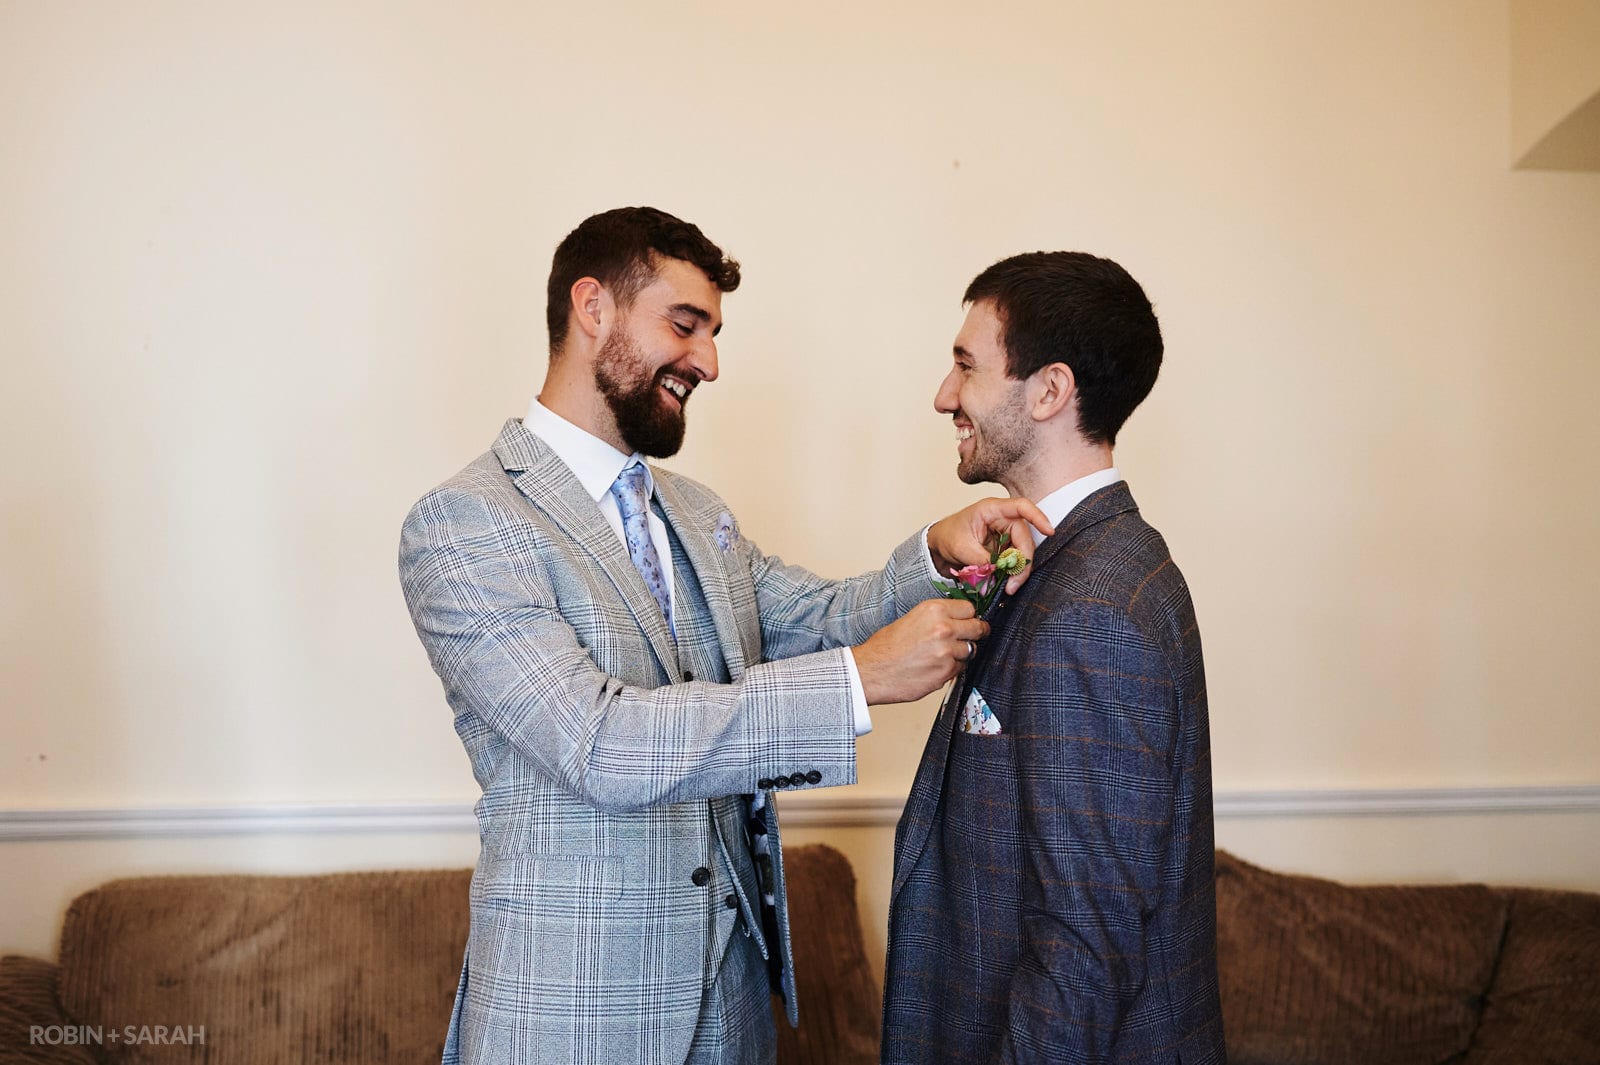 Groomsmen pins buttonhole flower onto groom's suit